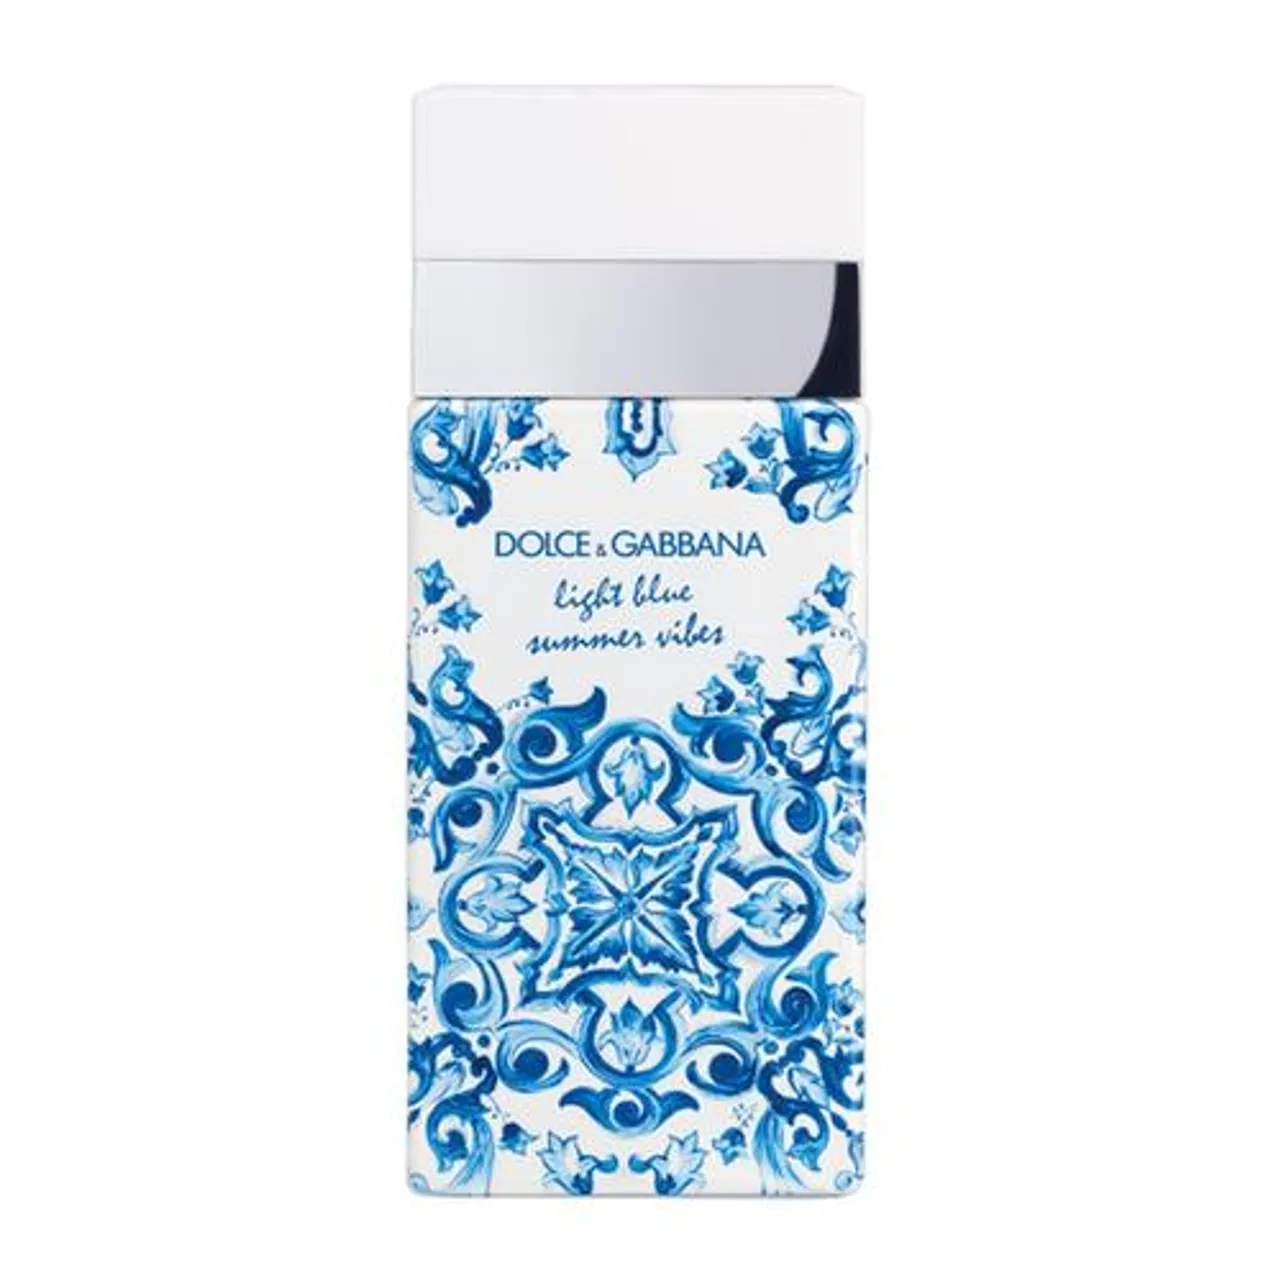 Dolce&Gabbana Light Blue Summer Vibes Eau de Toilette Limited edition 100 ml